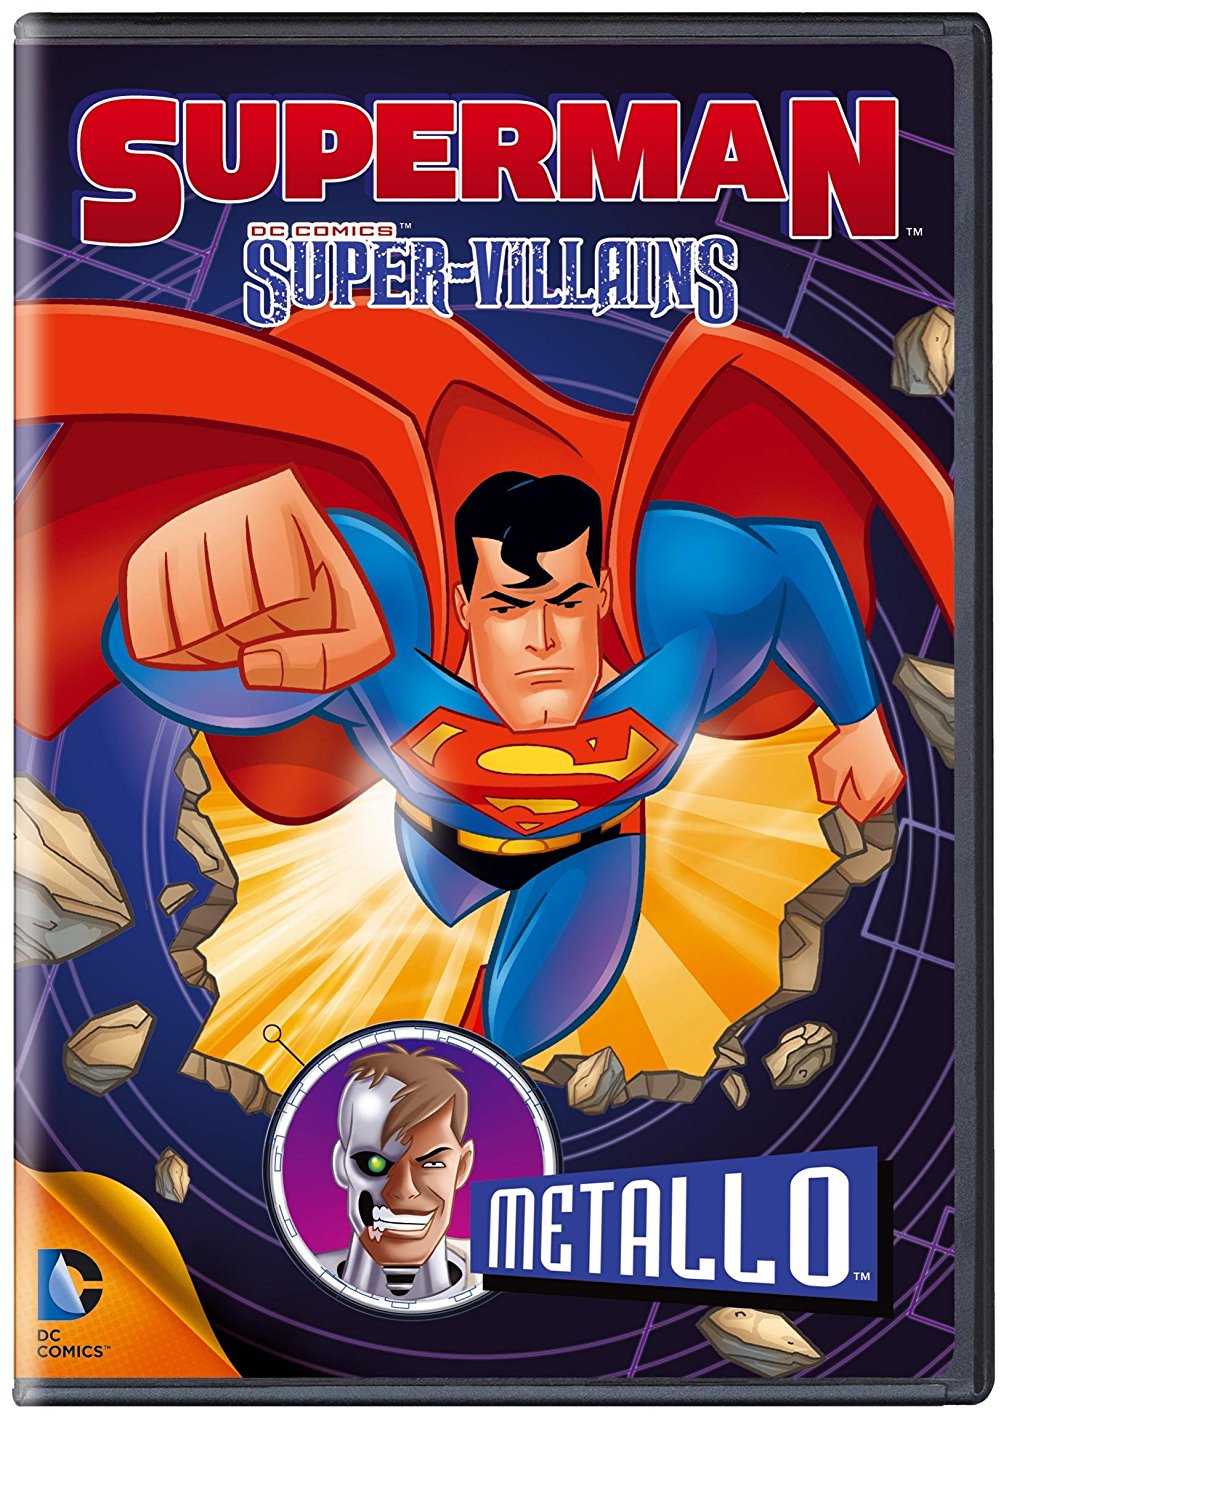 Superman Super-Villains Metallo.jpg